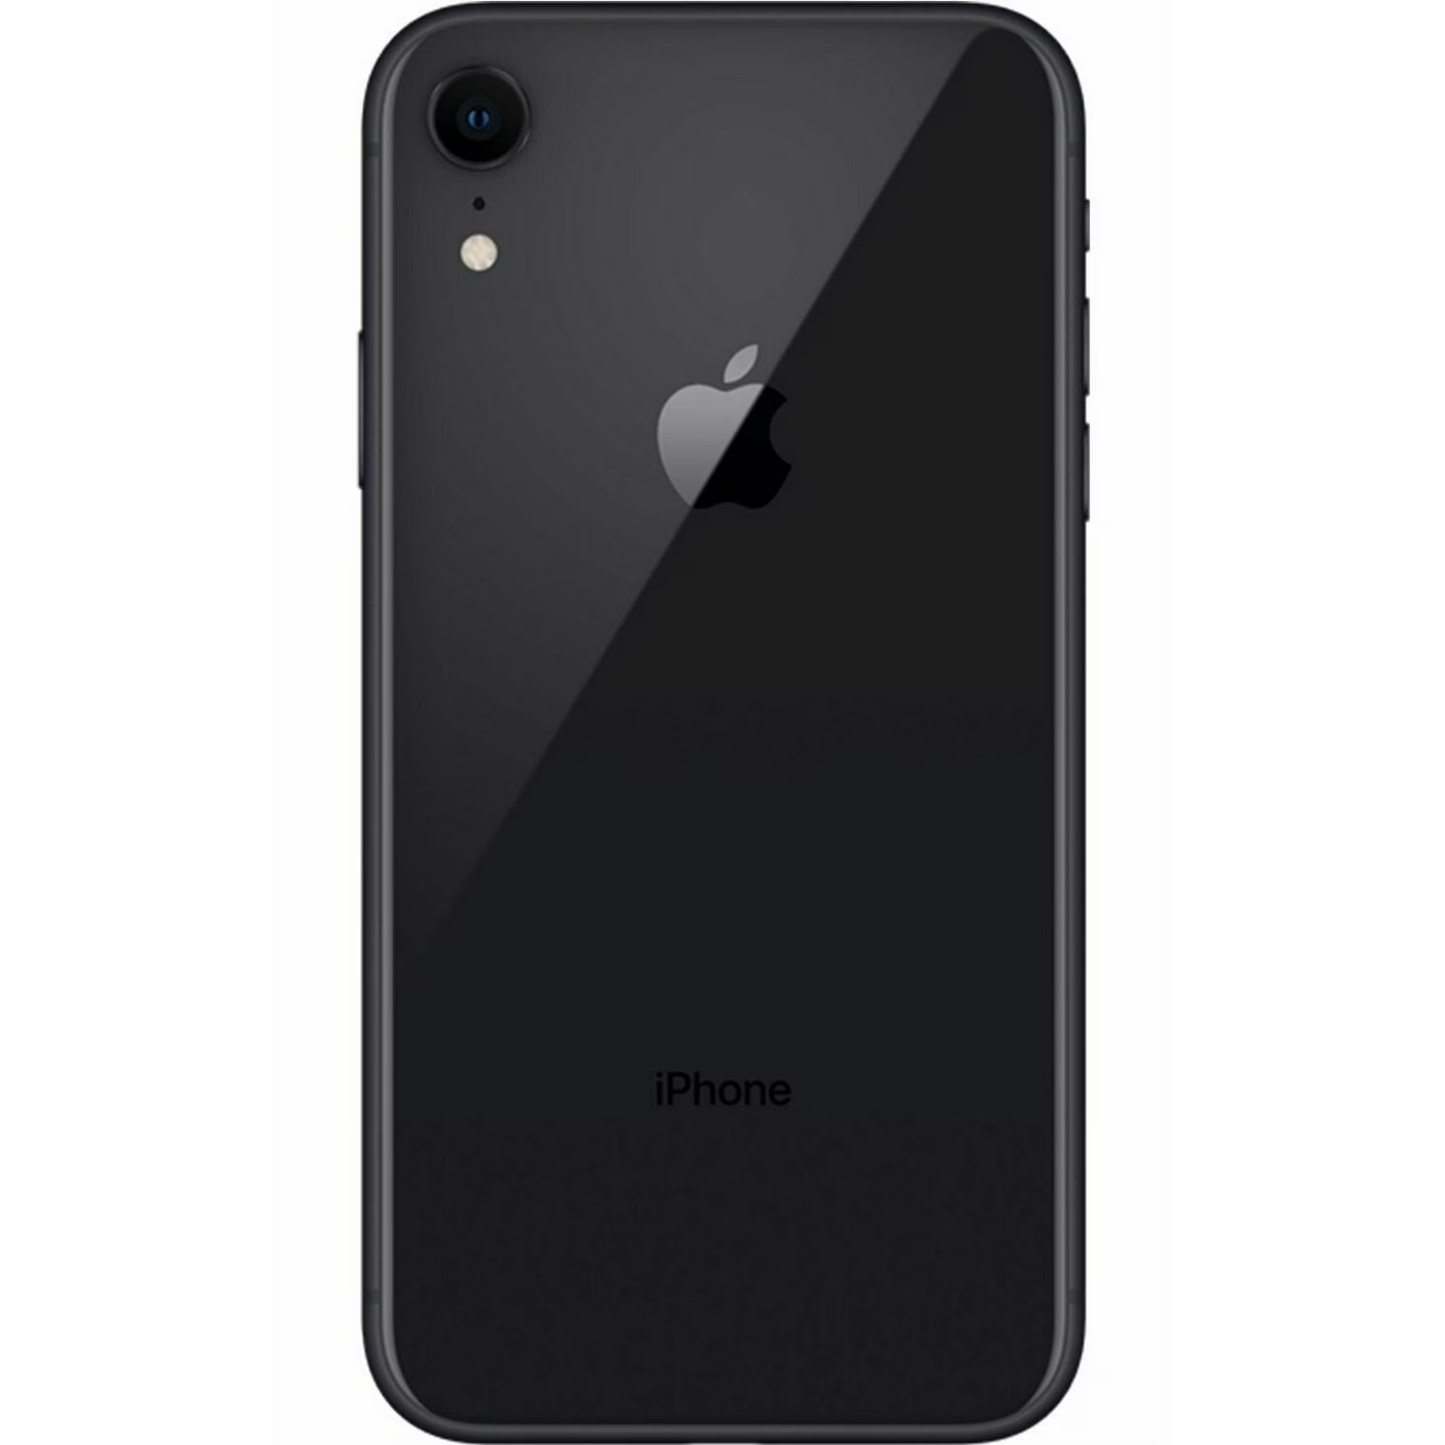 iPhone XR (128gb) - BLACK